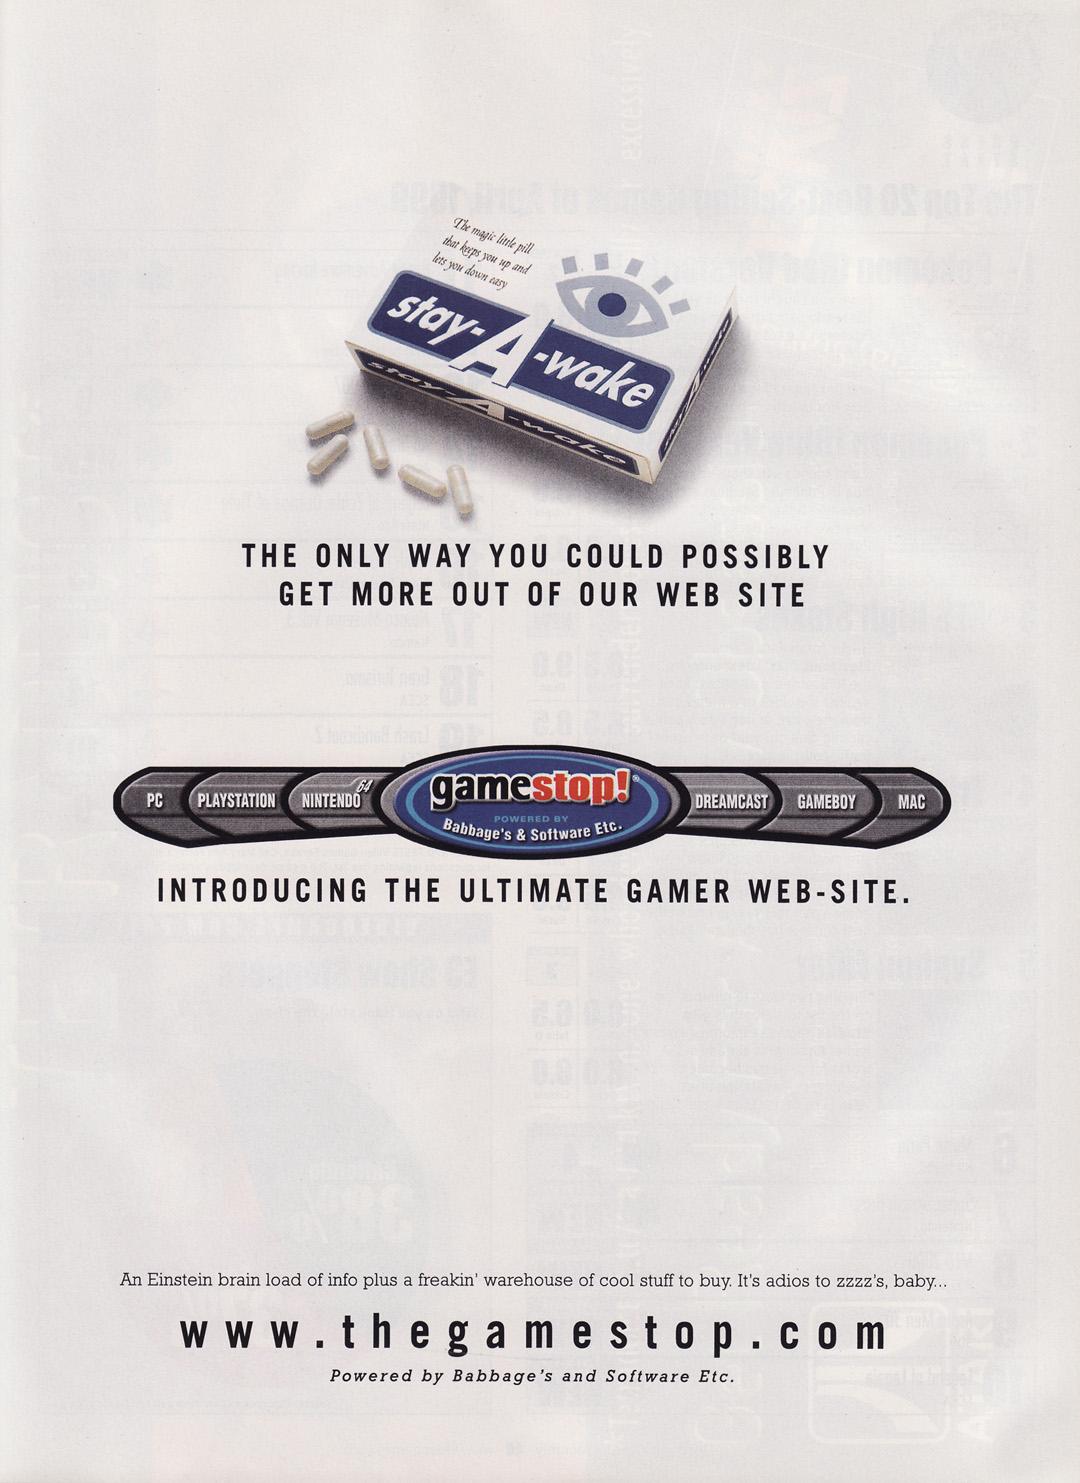 The first GameStop ad in EGM